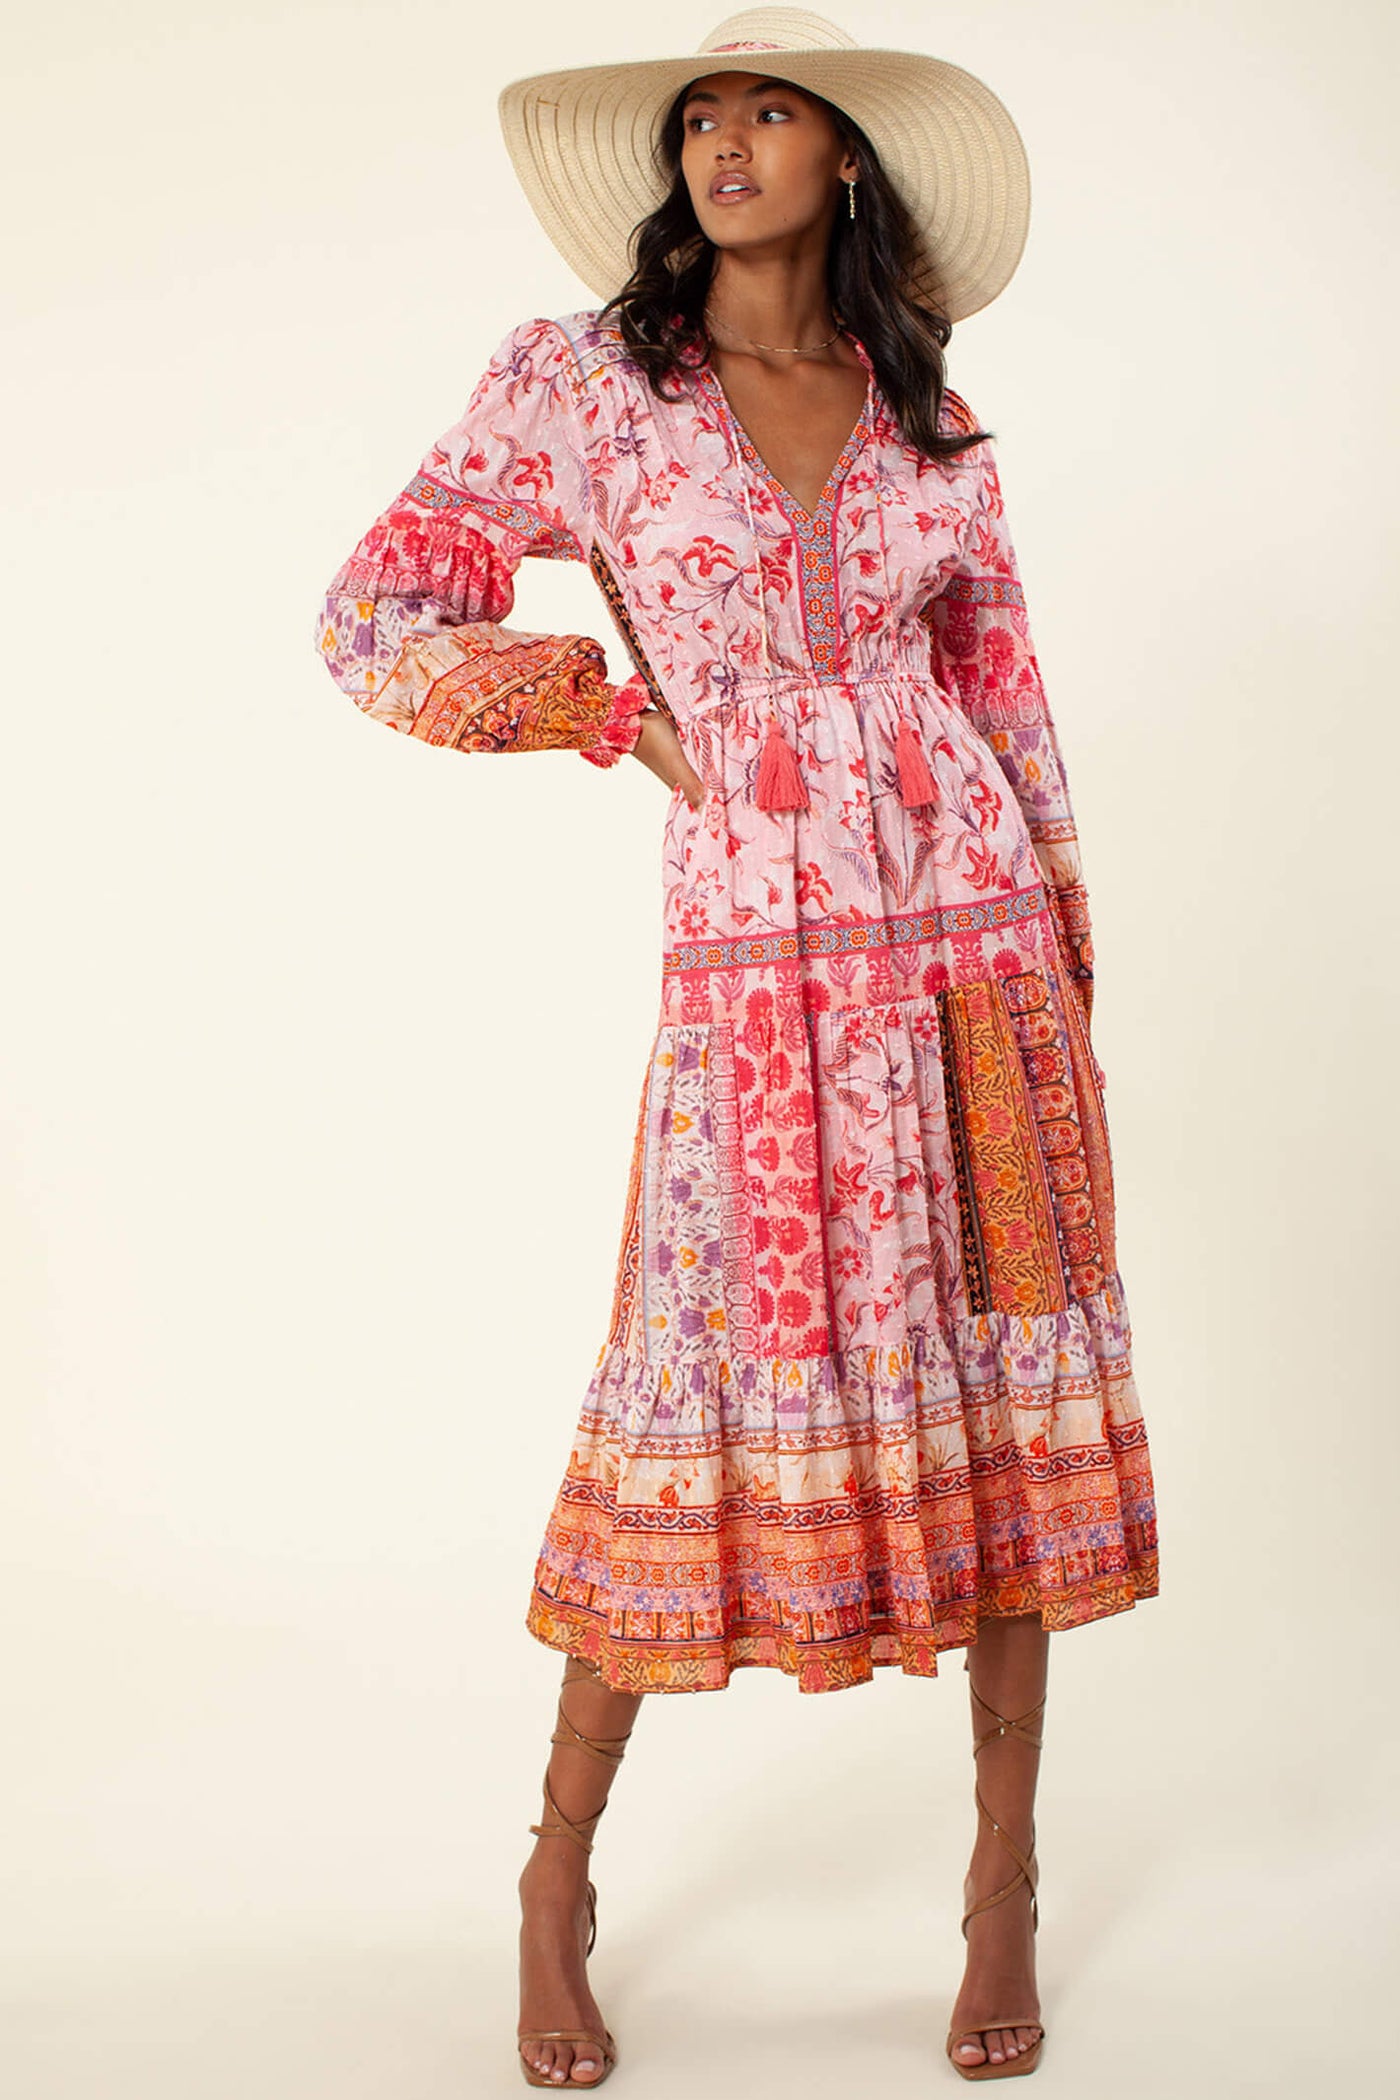 Hale Bob 25RC6286 Danae Pink Print Long Sleeve Dress - Lonah Boutique